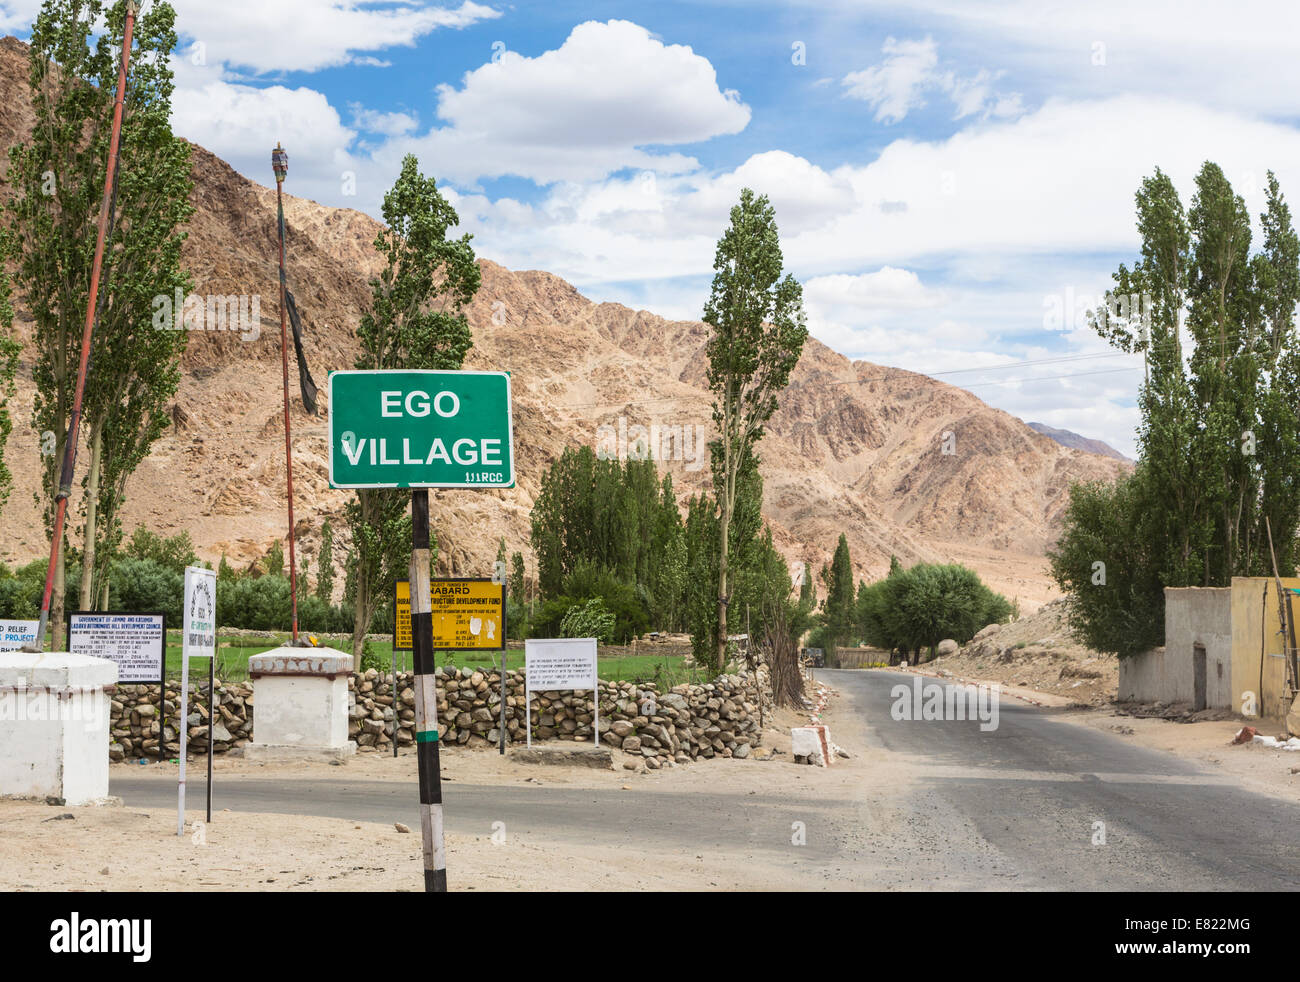 Ego village sign in Ladakh, India Stock Photo